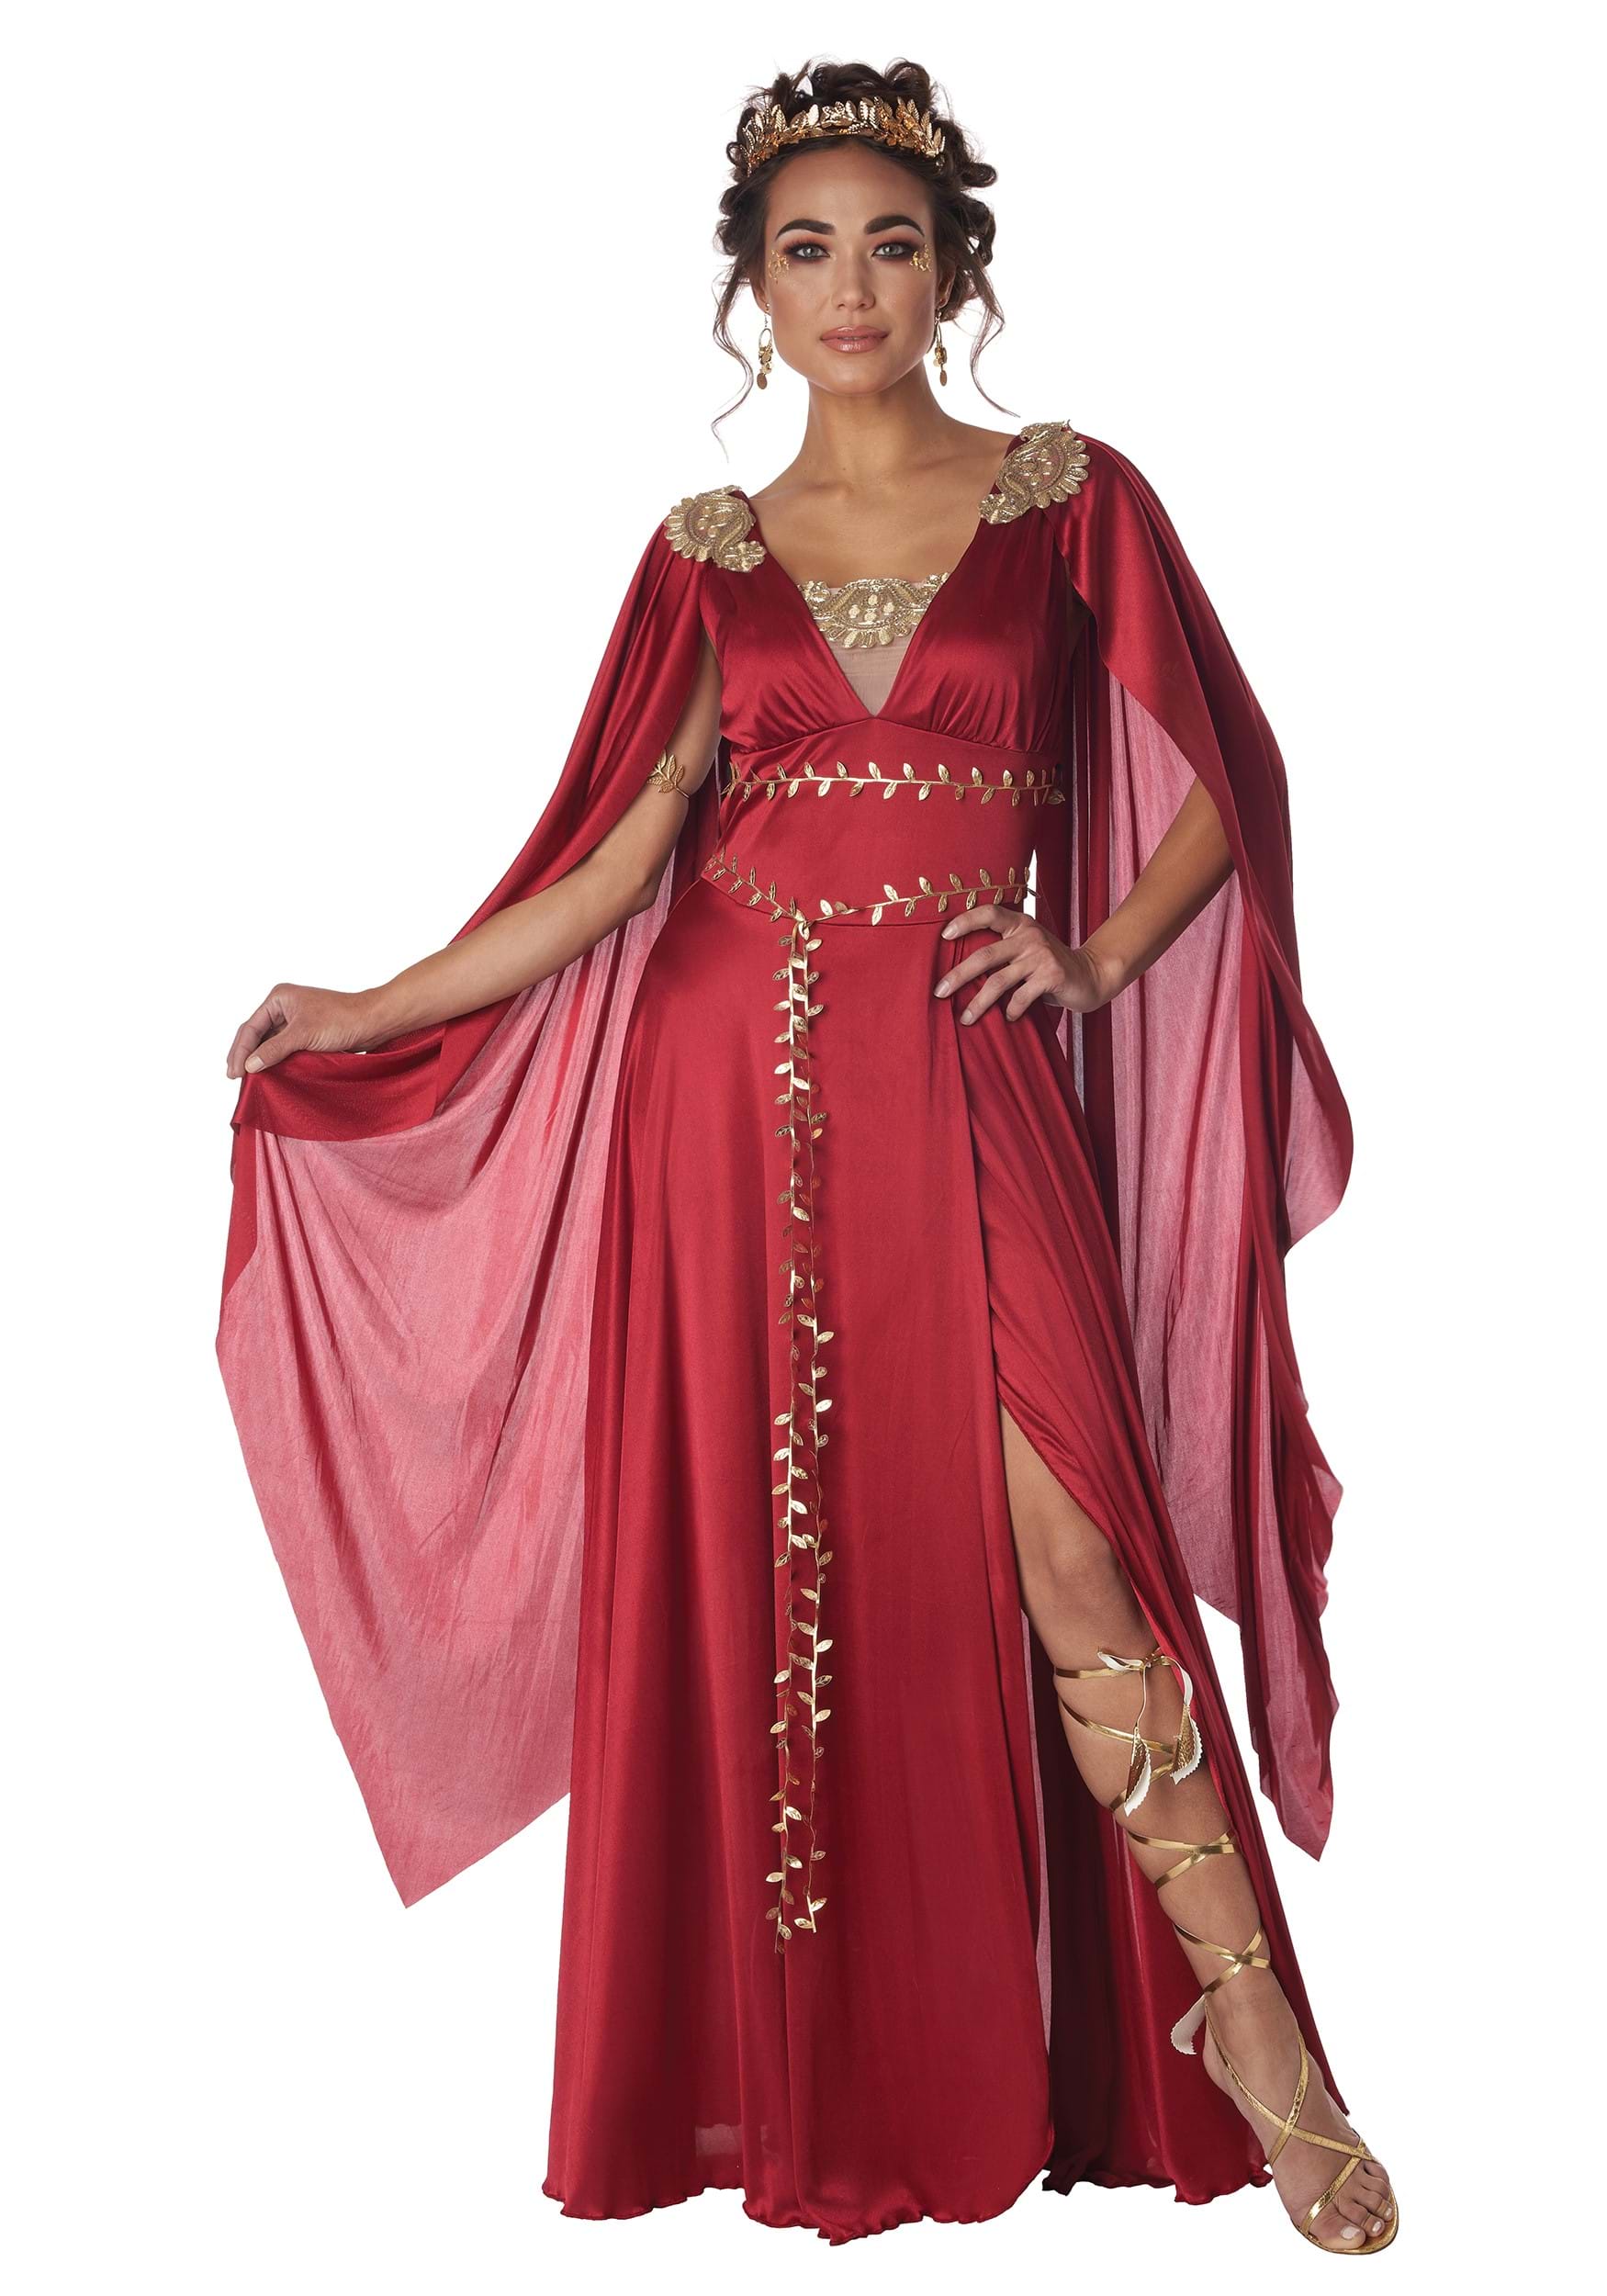 Women’s Red Roman Goddess Costume